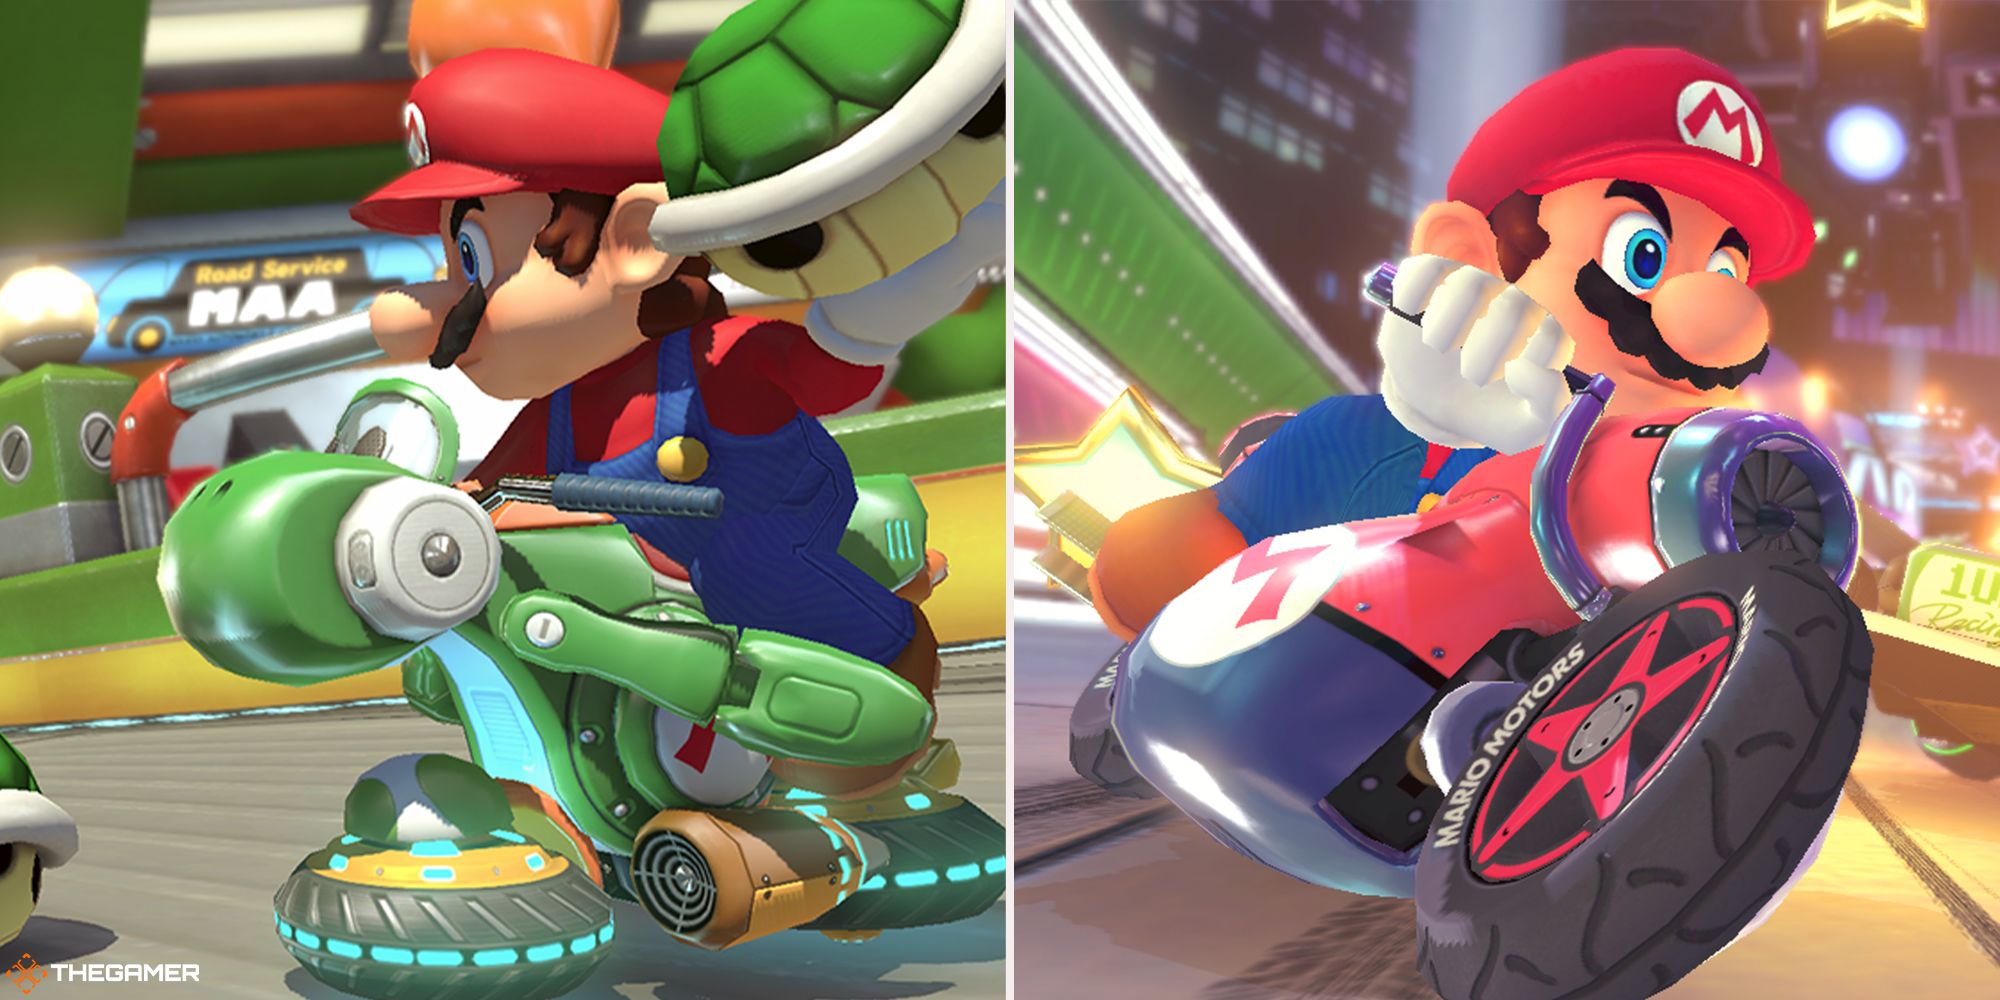 Mario Kart 8 Deluxe - Mario riding the Comet and the Yoshi bike best car Mario Kart 8